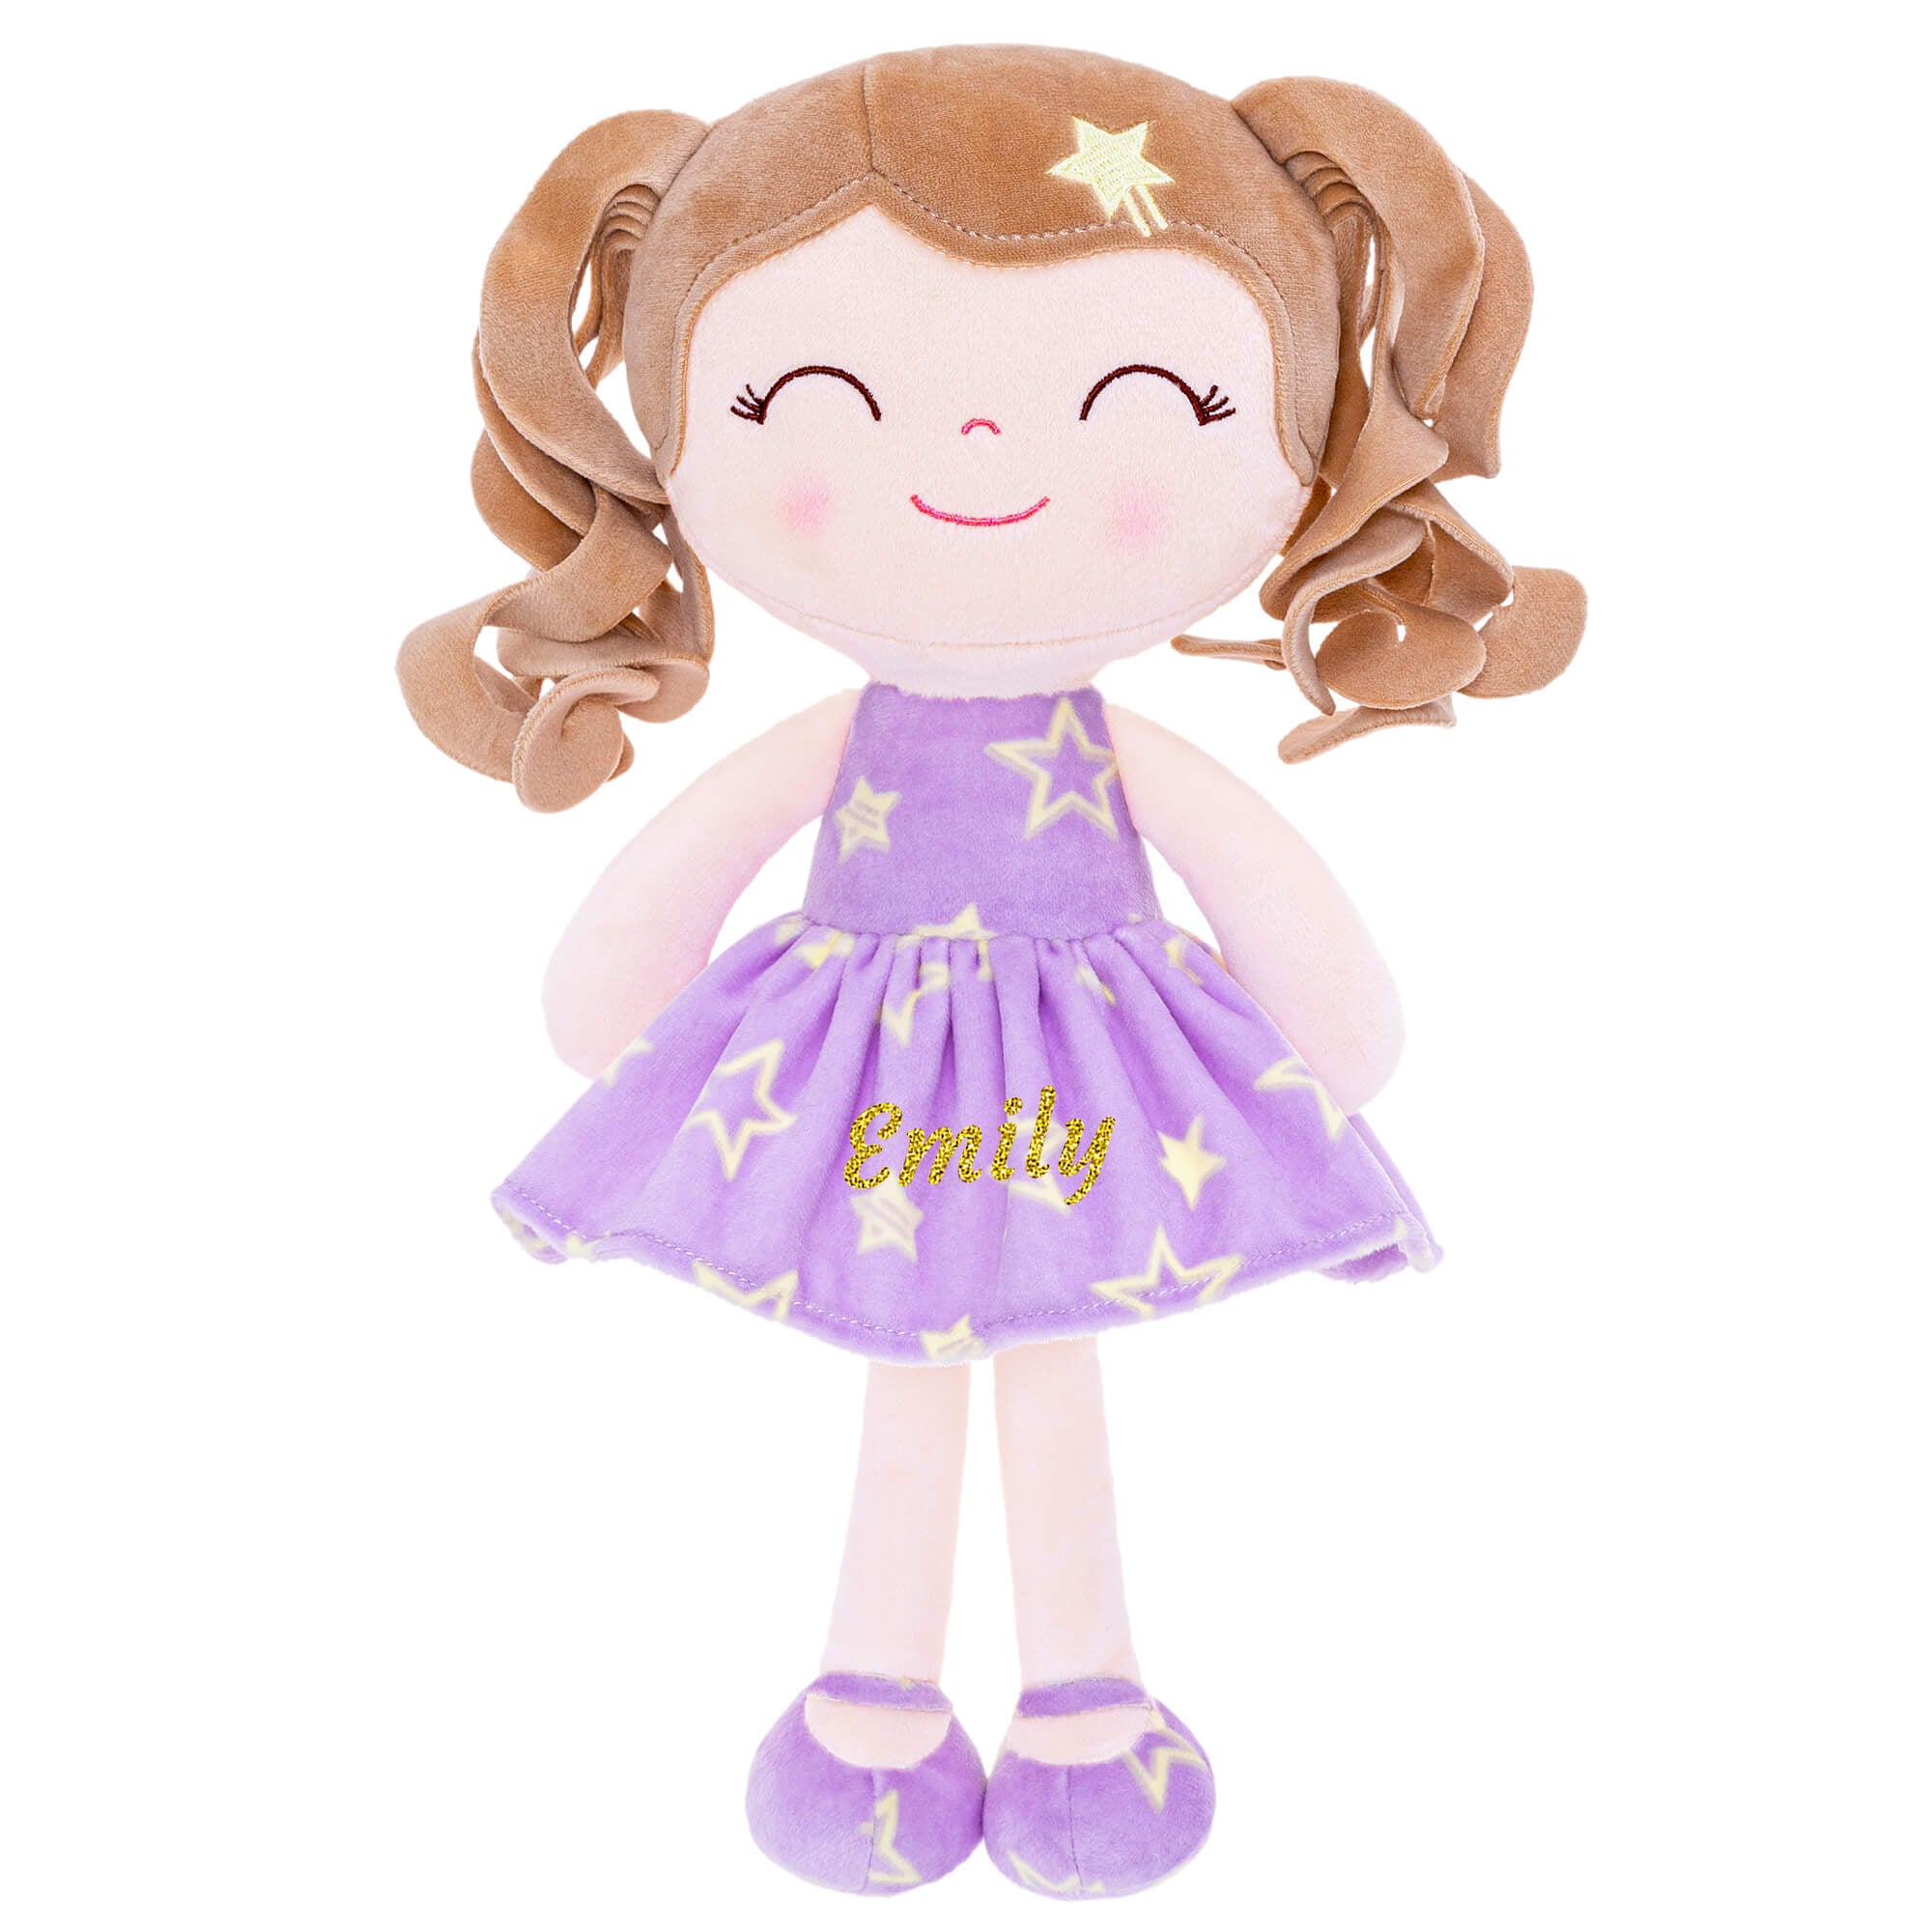 Gloveleya 12-inch Curly Hair Baby Star Dress Doll Purple